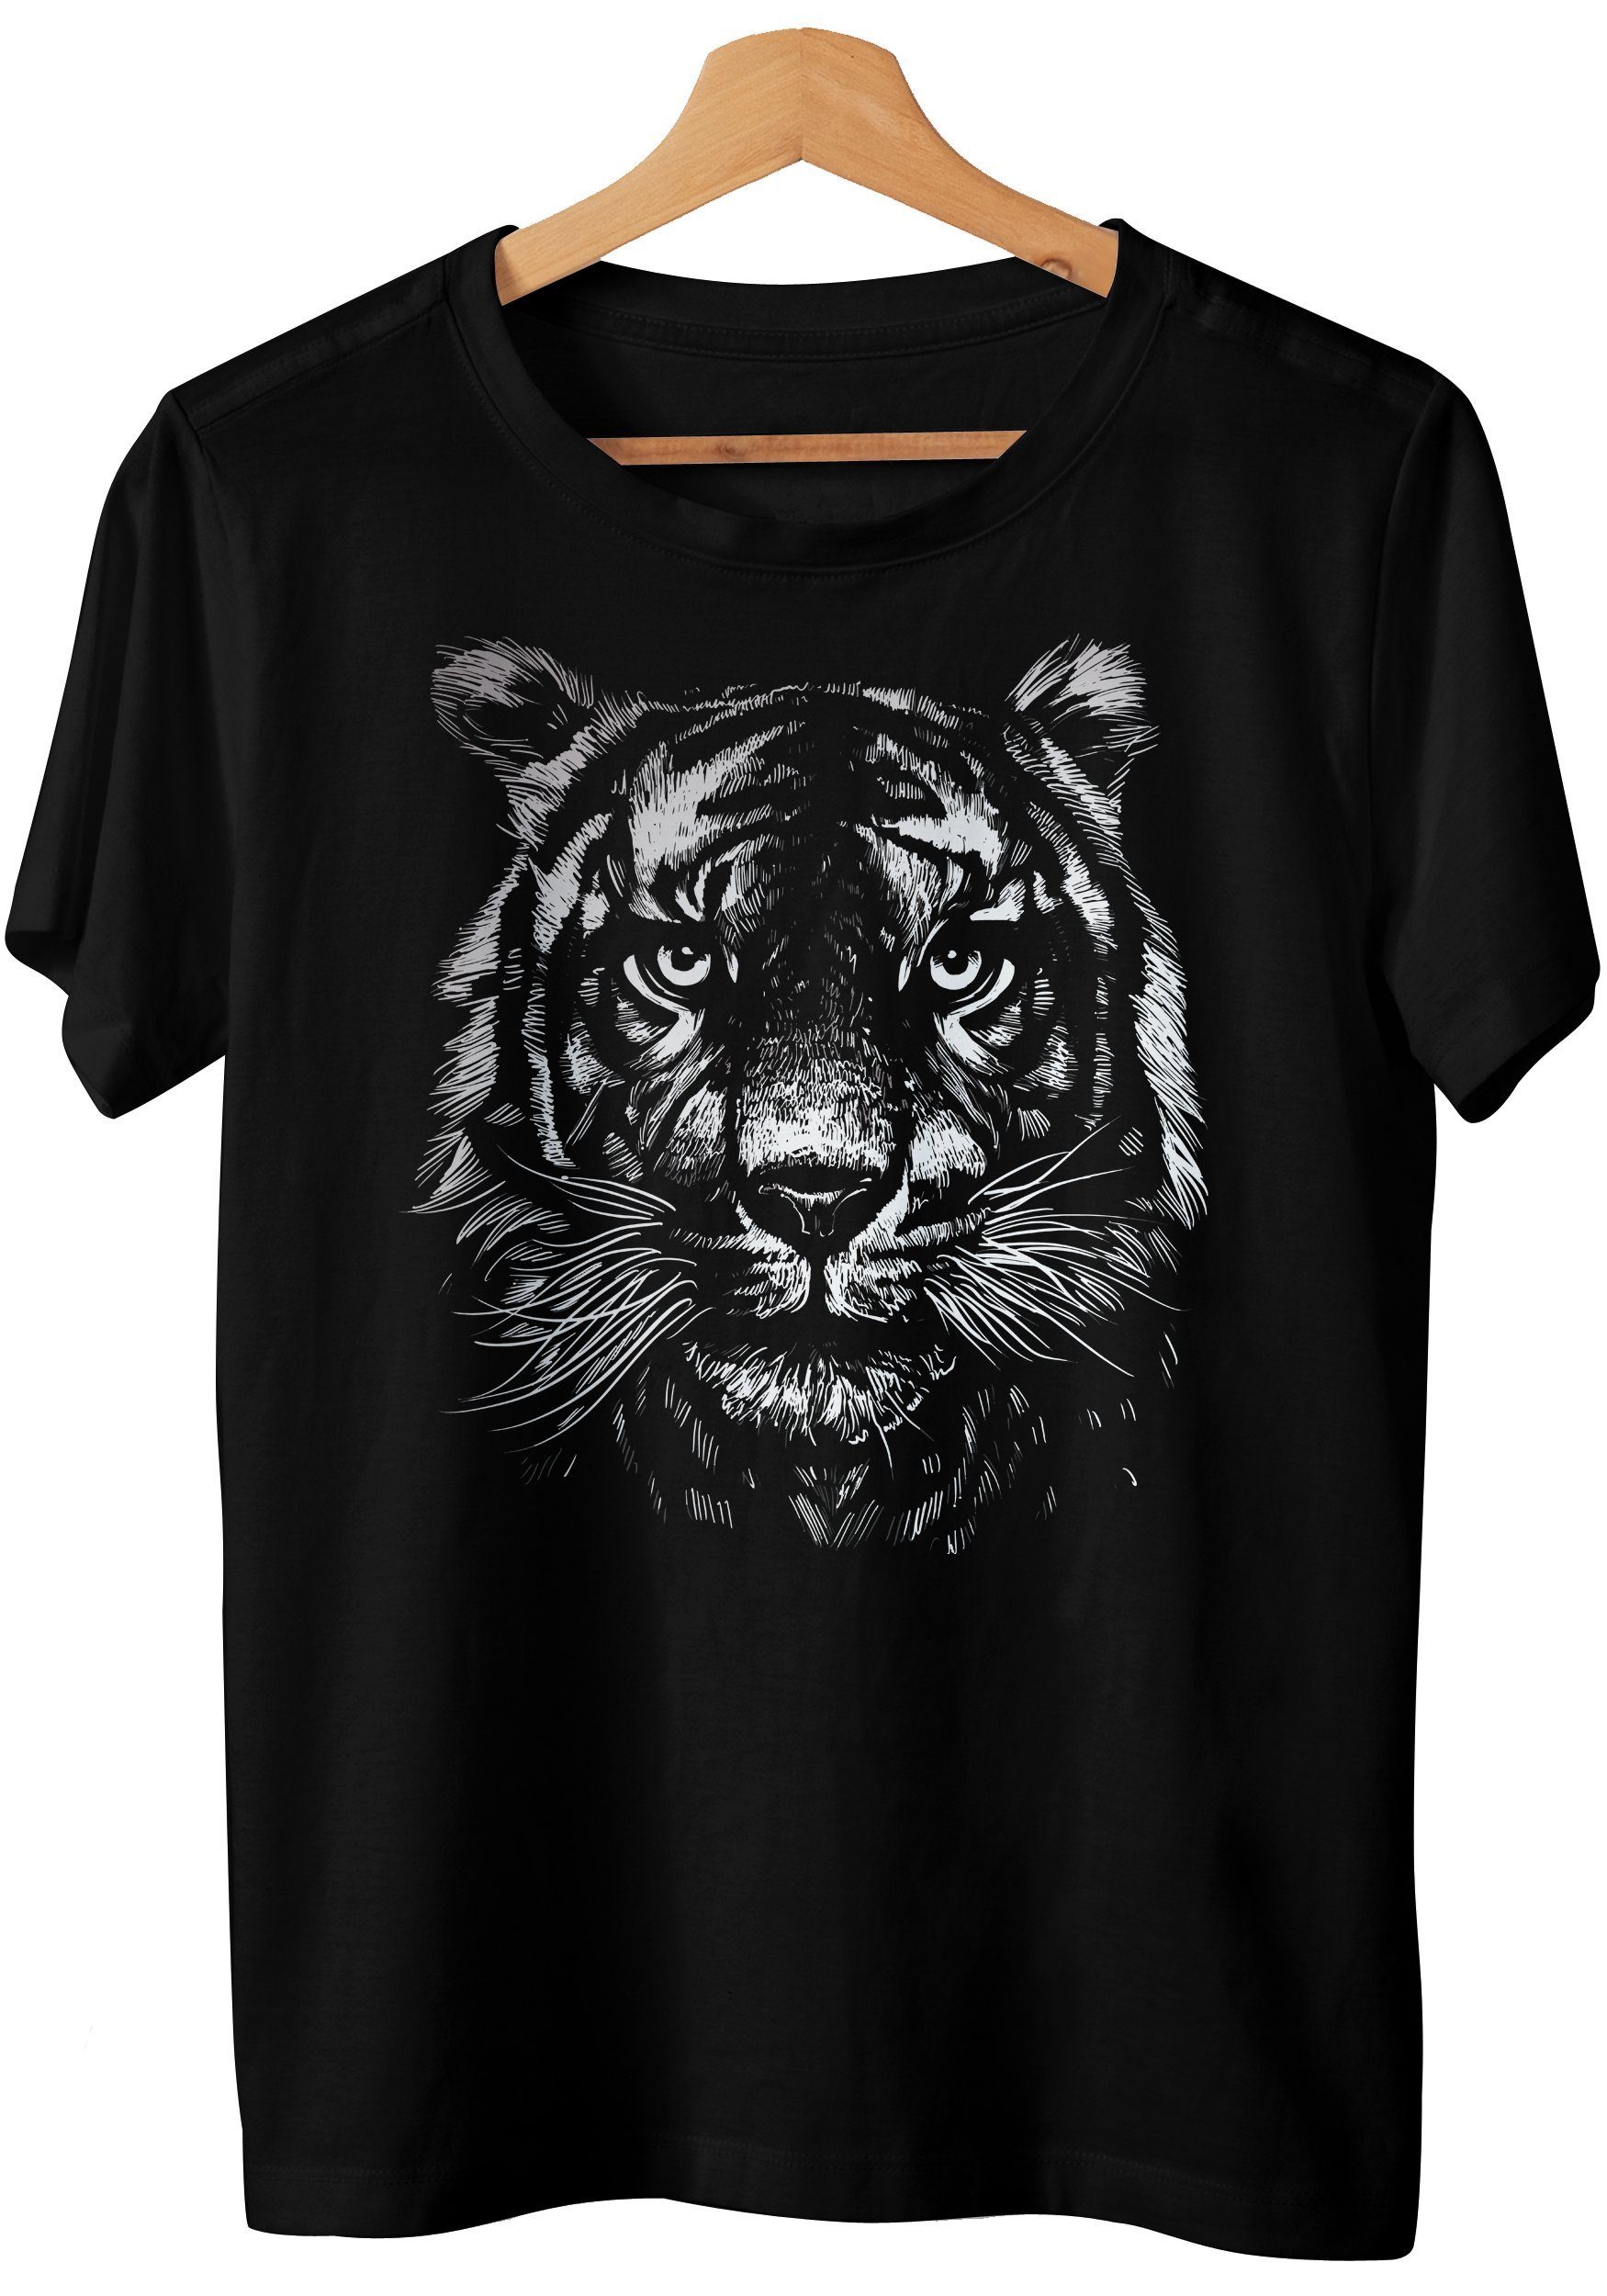 Shirt Tiger Year & monochrome T-Shirt of Tiger 2022 Motiv Design Detail Art 2022 the